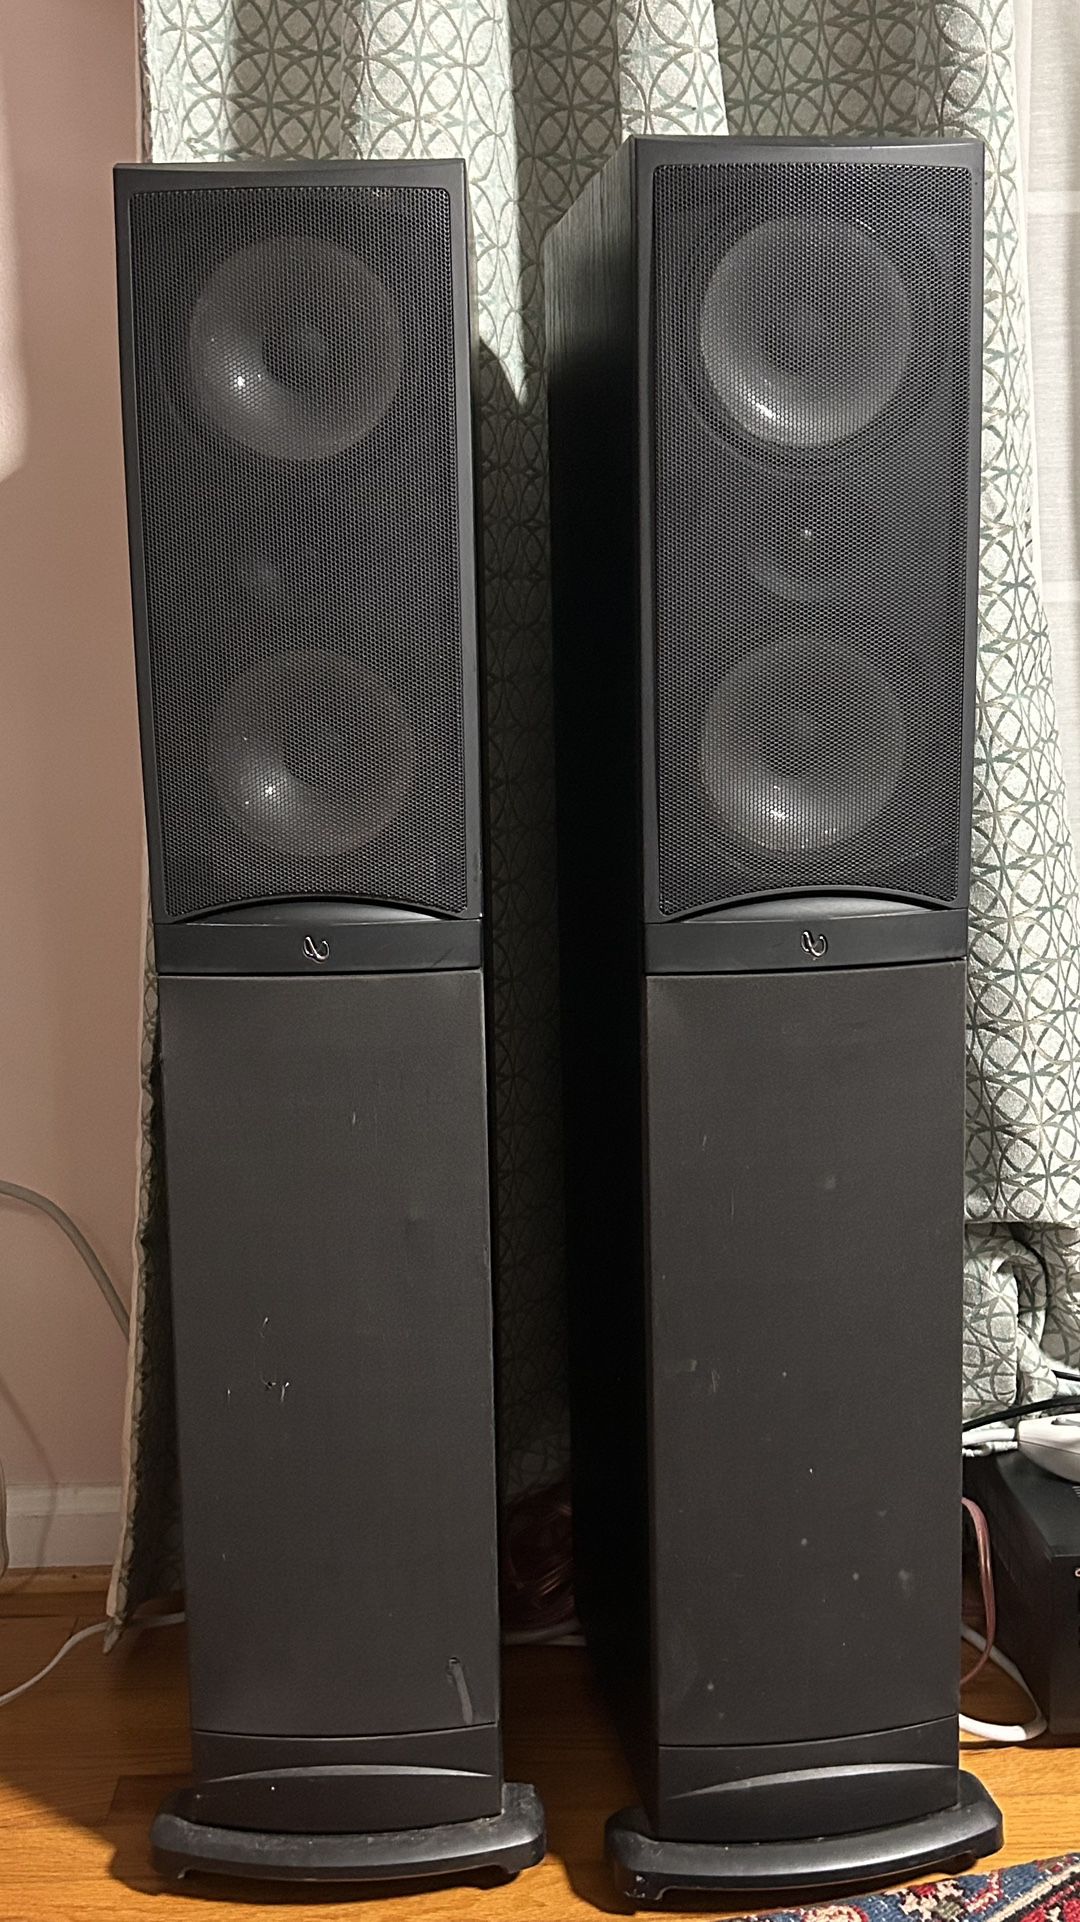 Pair of Infinity Speakers +ONKYO Stereo Receiver